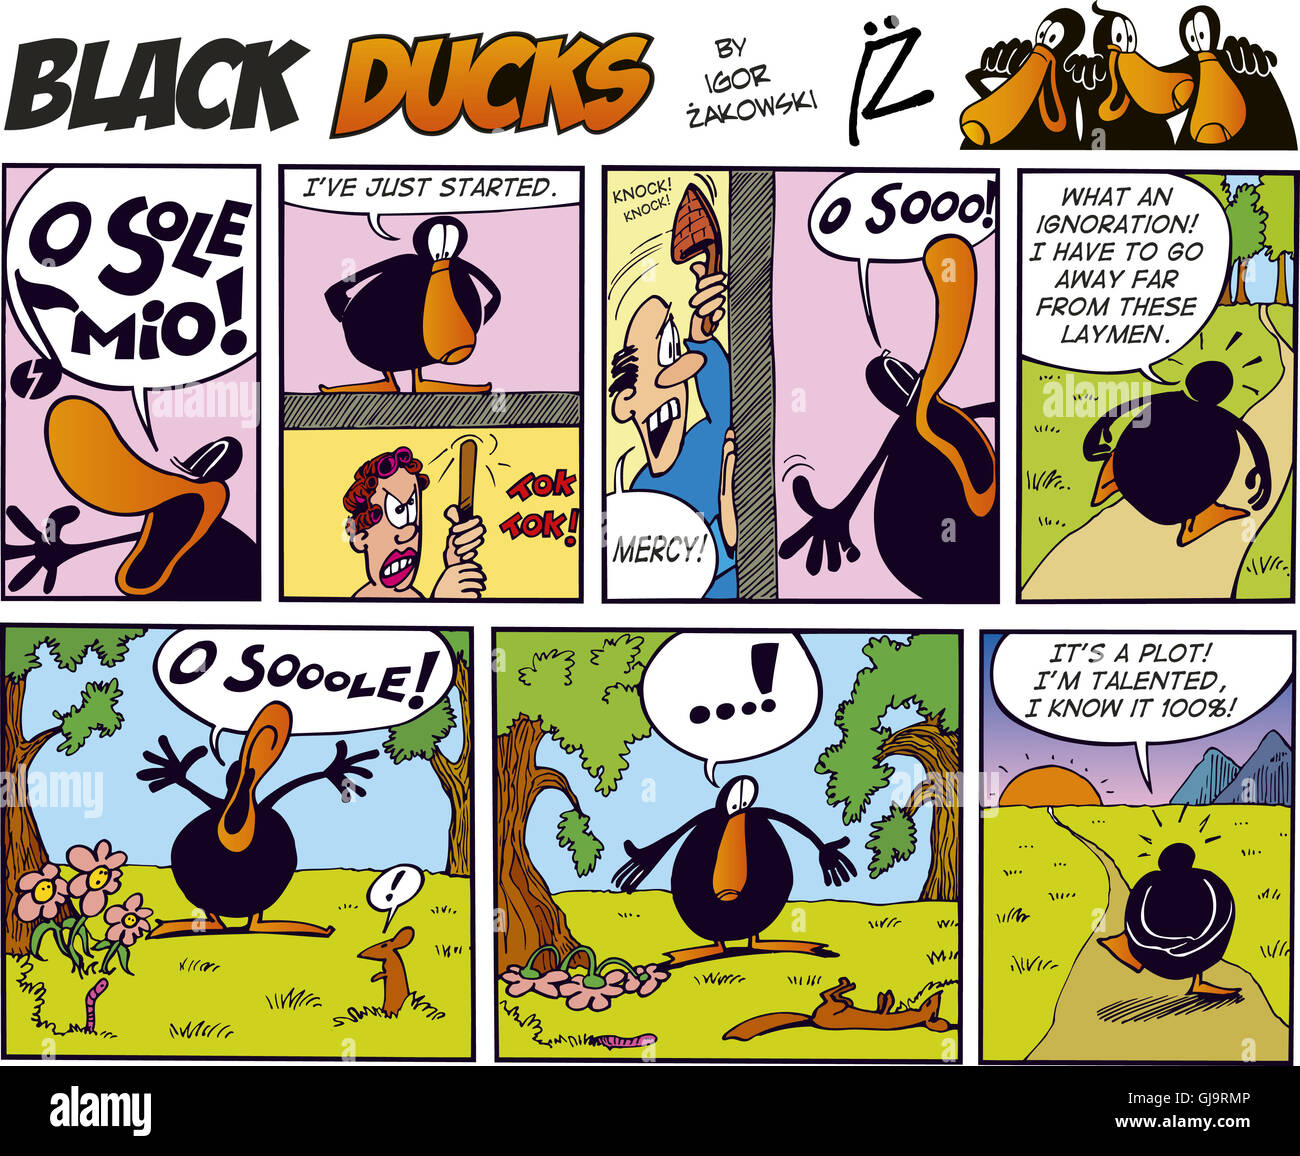 Black Ducks Comics episode 12 Stock Photo